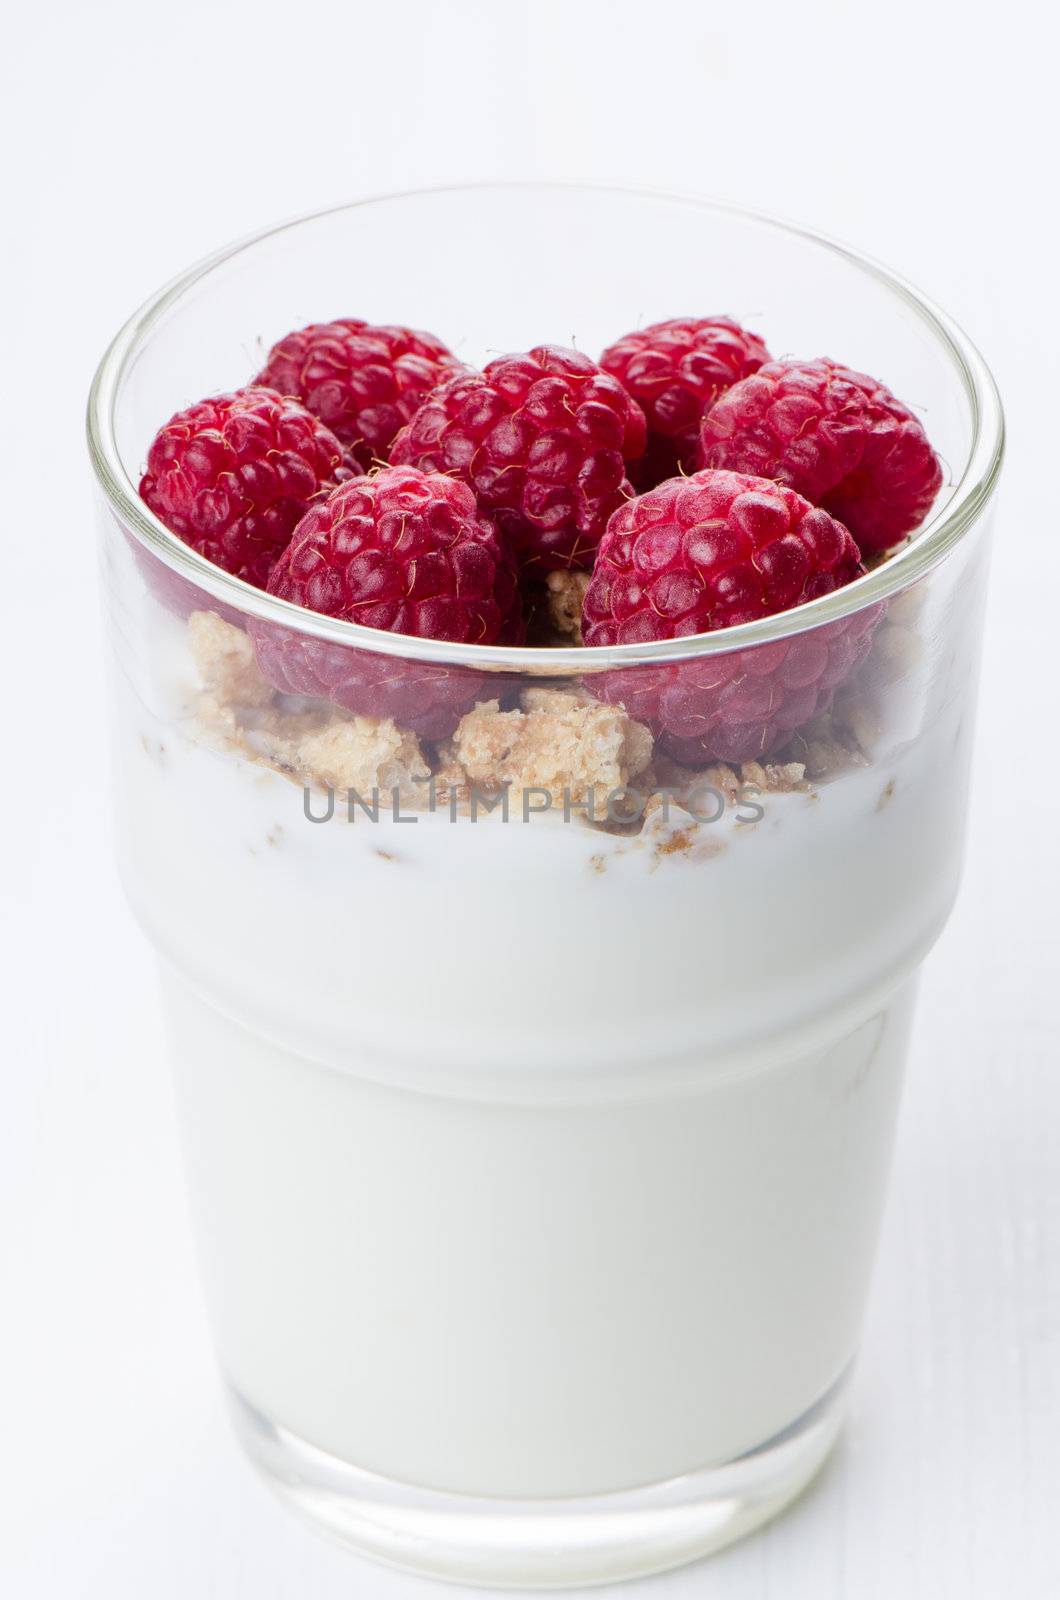 Yogurt with raspberries in  glass on white